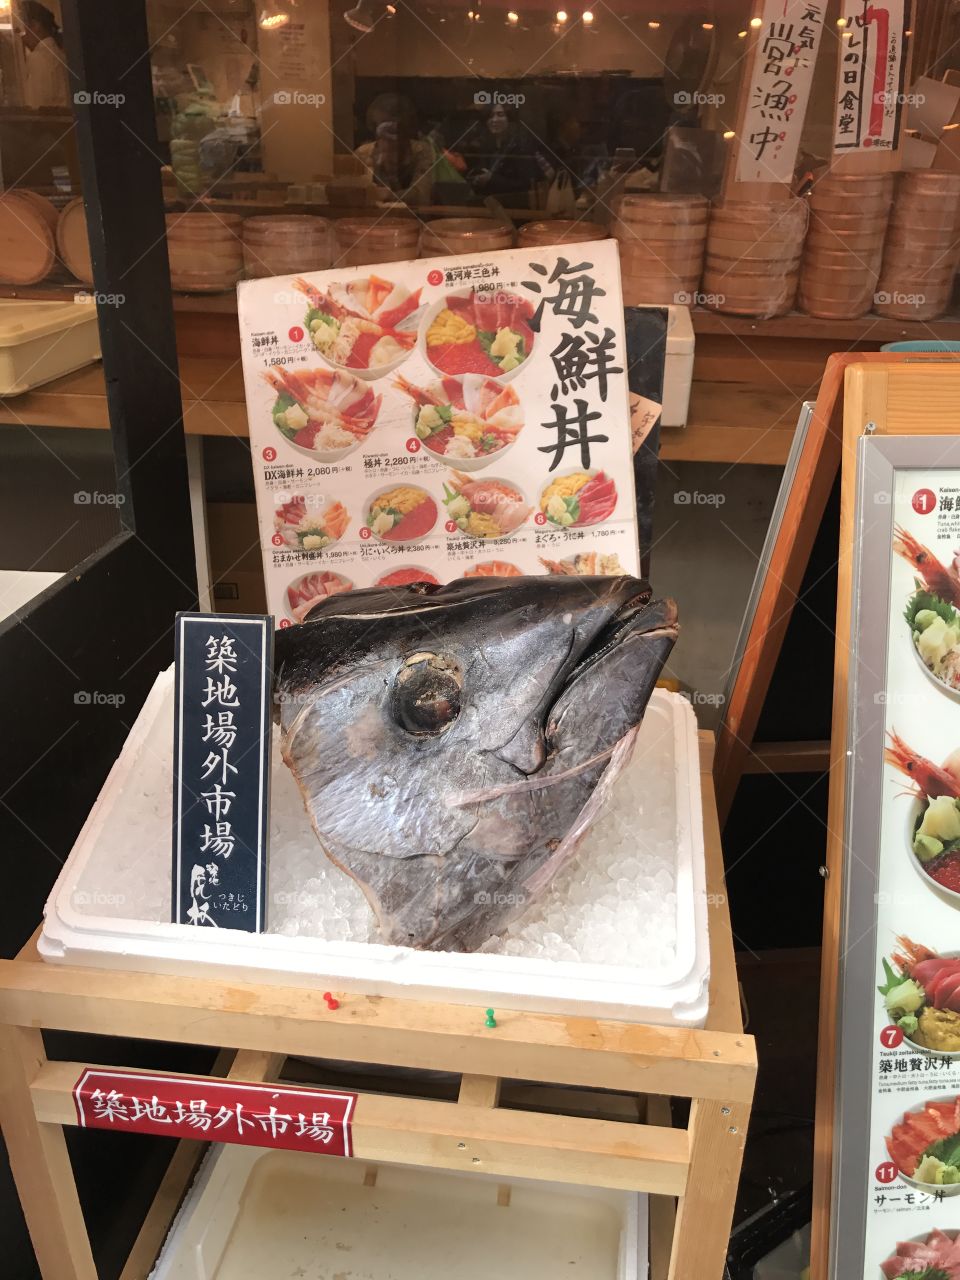 Japan street view, restaurant selling fish head, sushi restaurant 